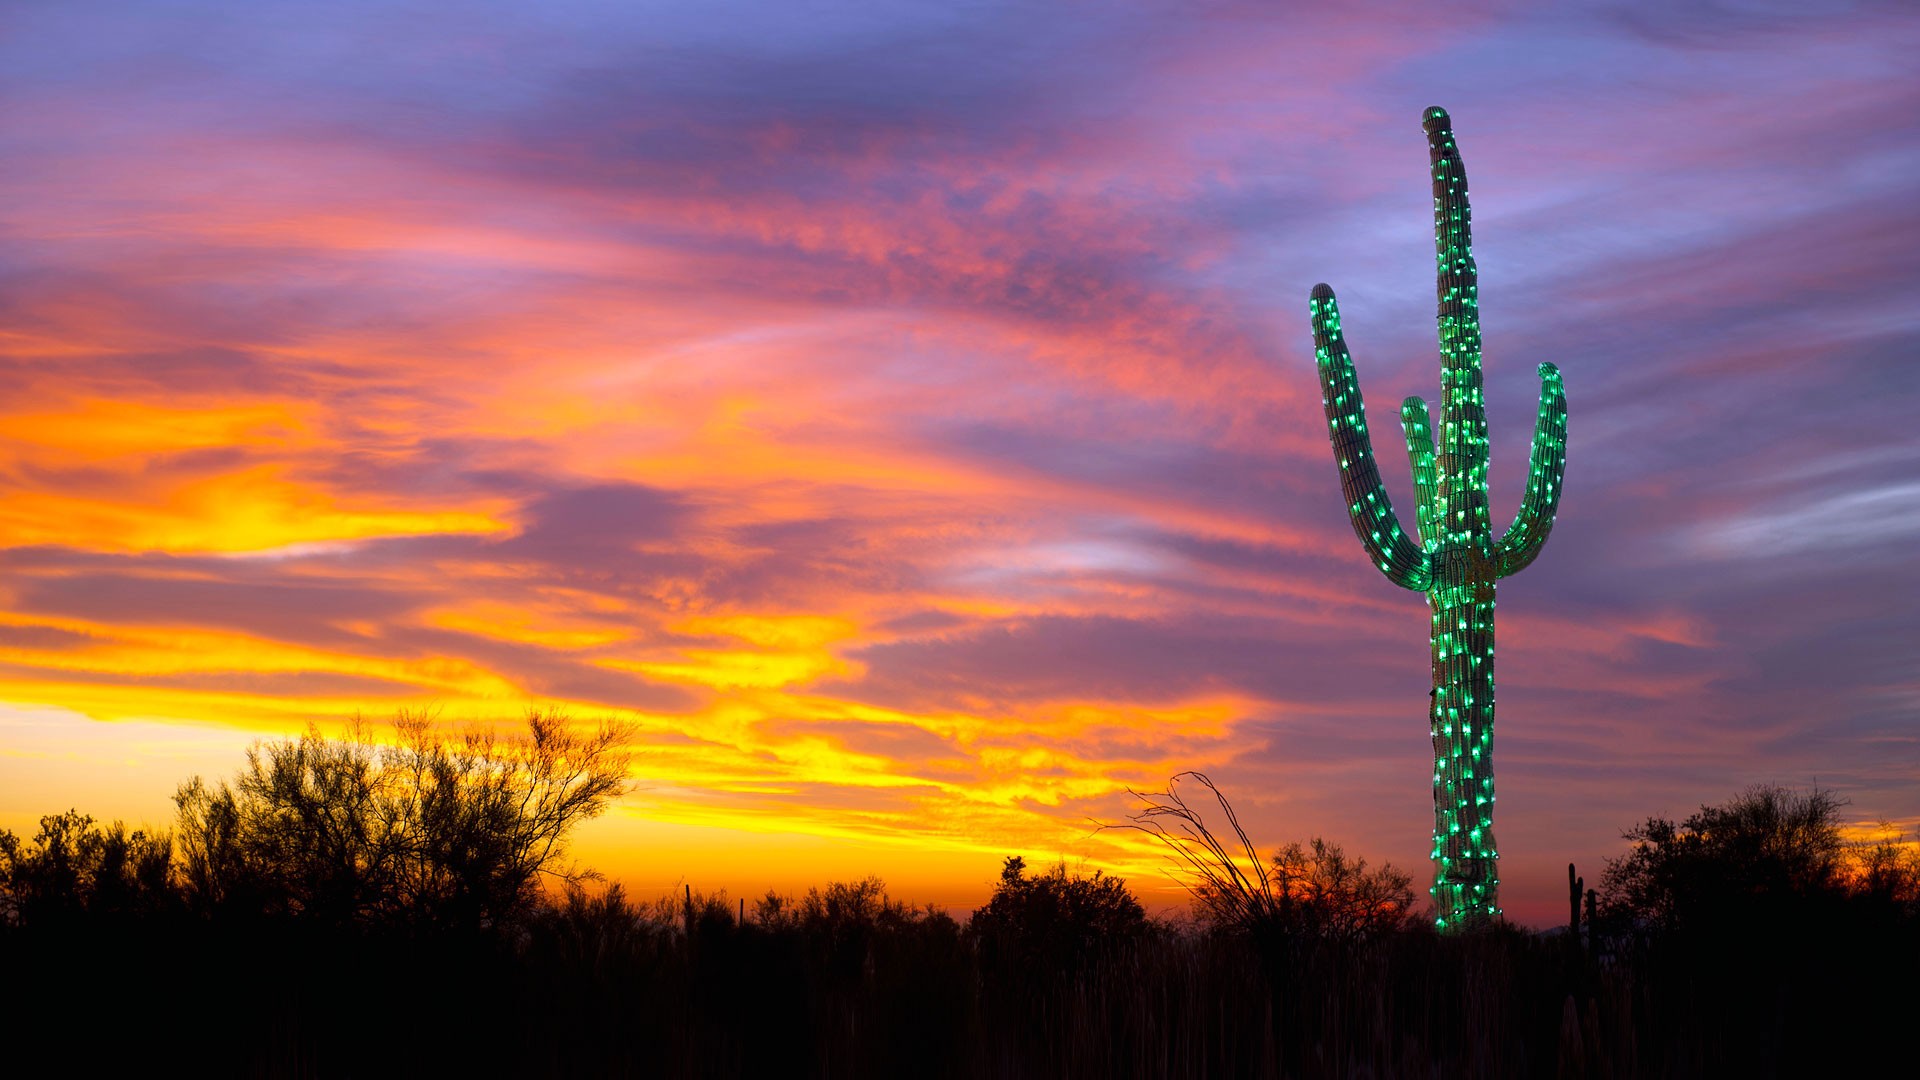 General 1920x1080 nature landscape Arizona USA trees forest cactus lights sunset clouds orange sky sky